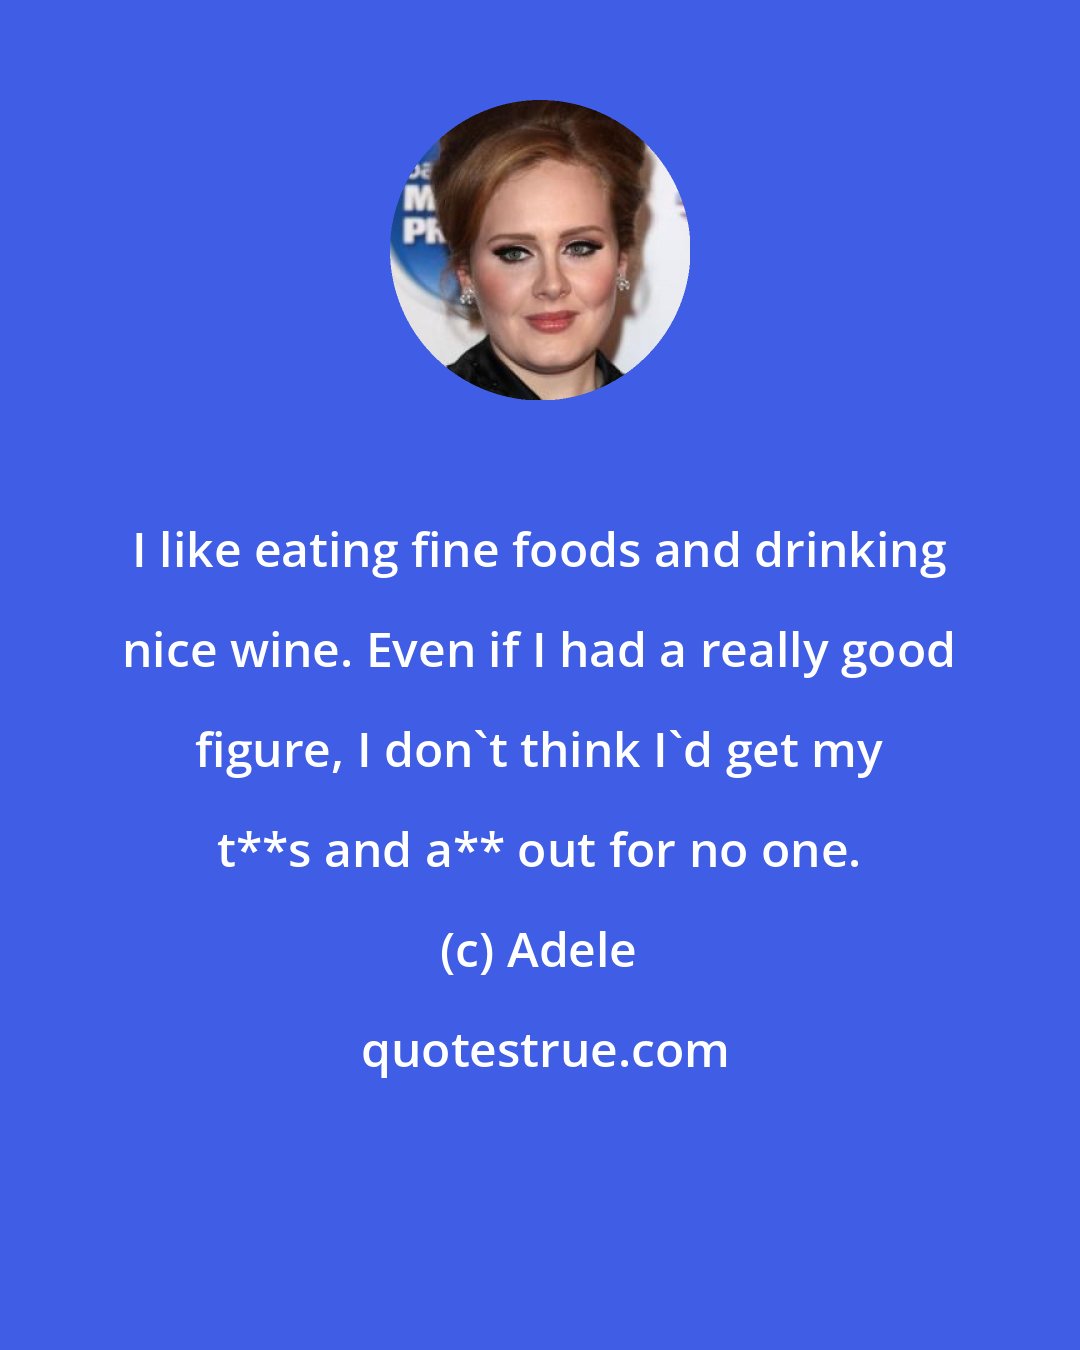 Adele: I like eating fine foods and drinking nice wine. Even if I had a really good figure, I don't think I'd get my t**s and a** out for no one.